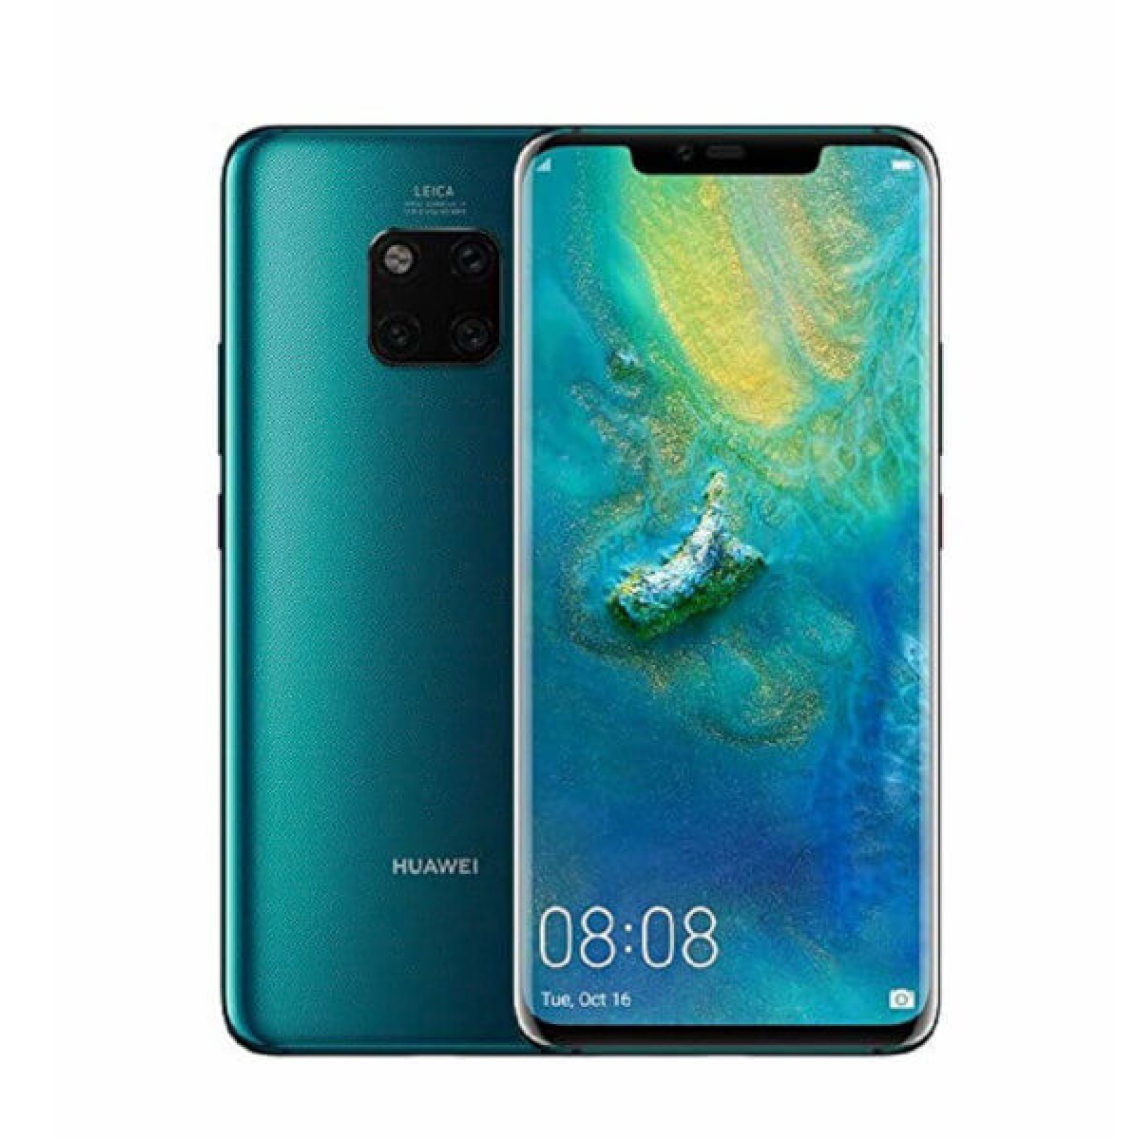 Huawei - Huawei Mate 20 Pro 6GB/128GB Vert Émeraude Dual Sim - Smartphone Android